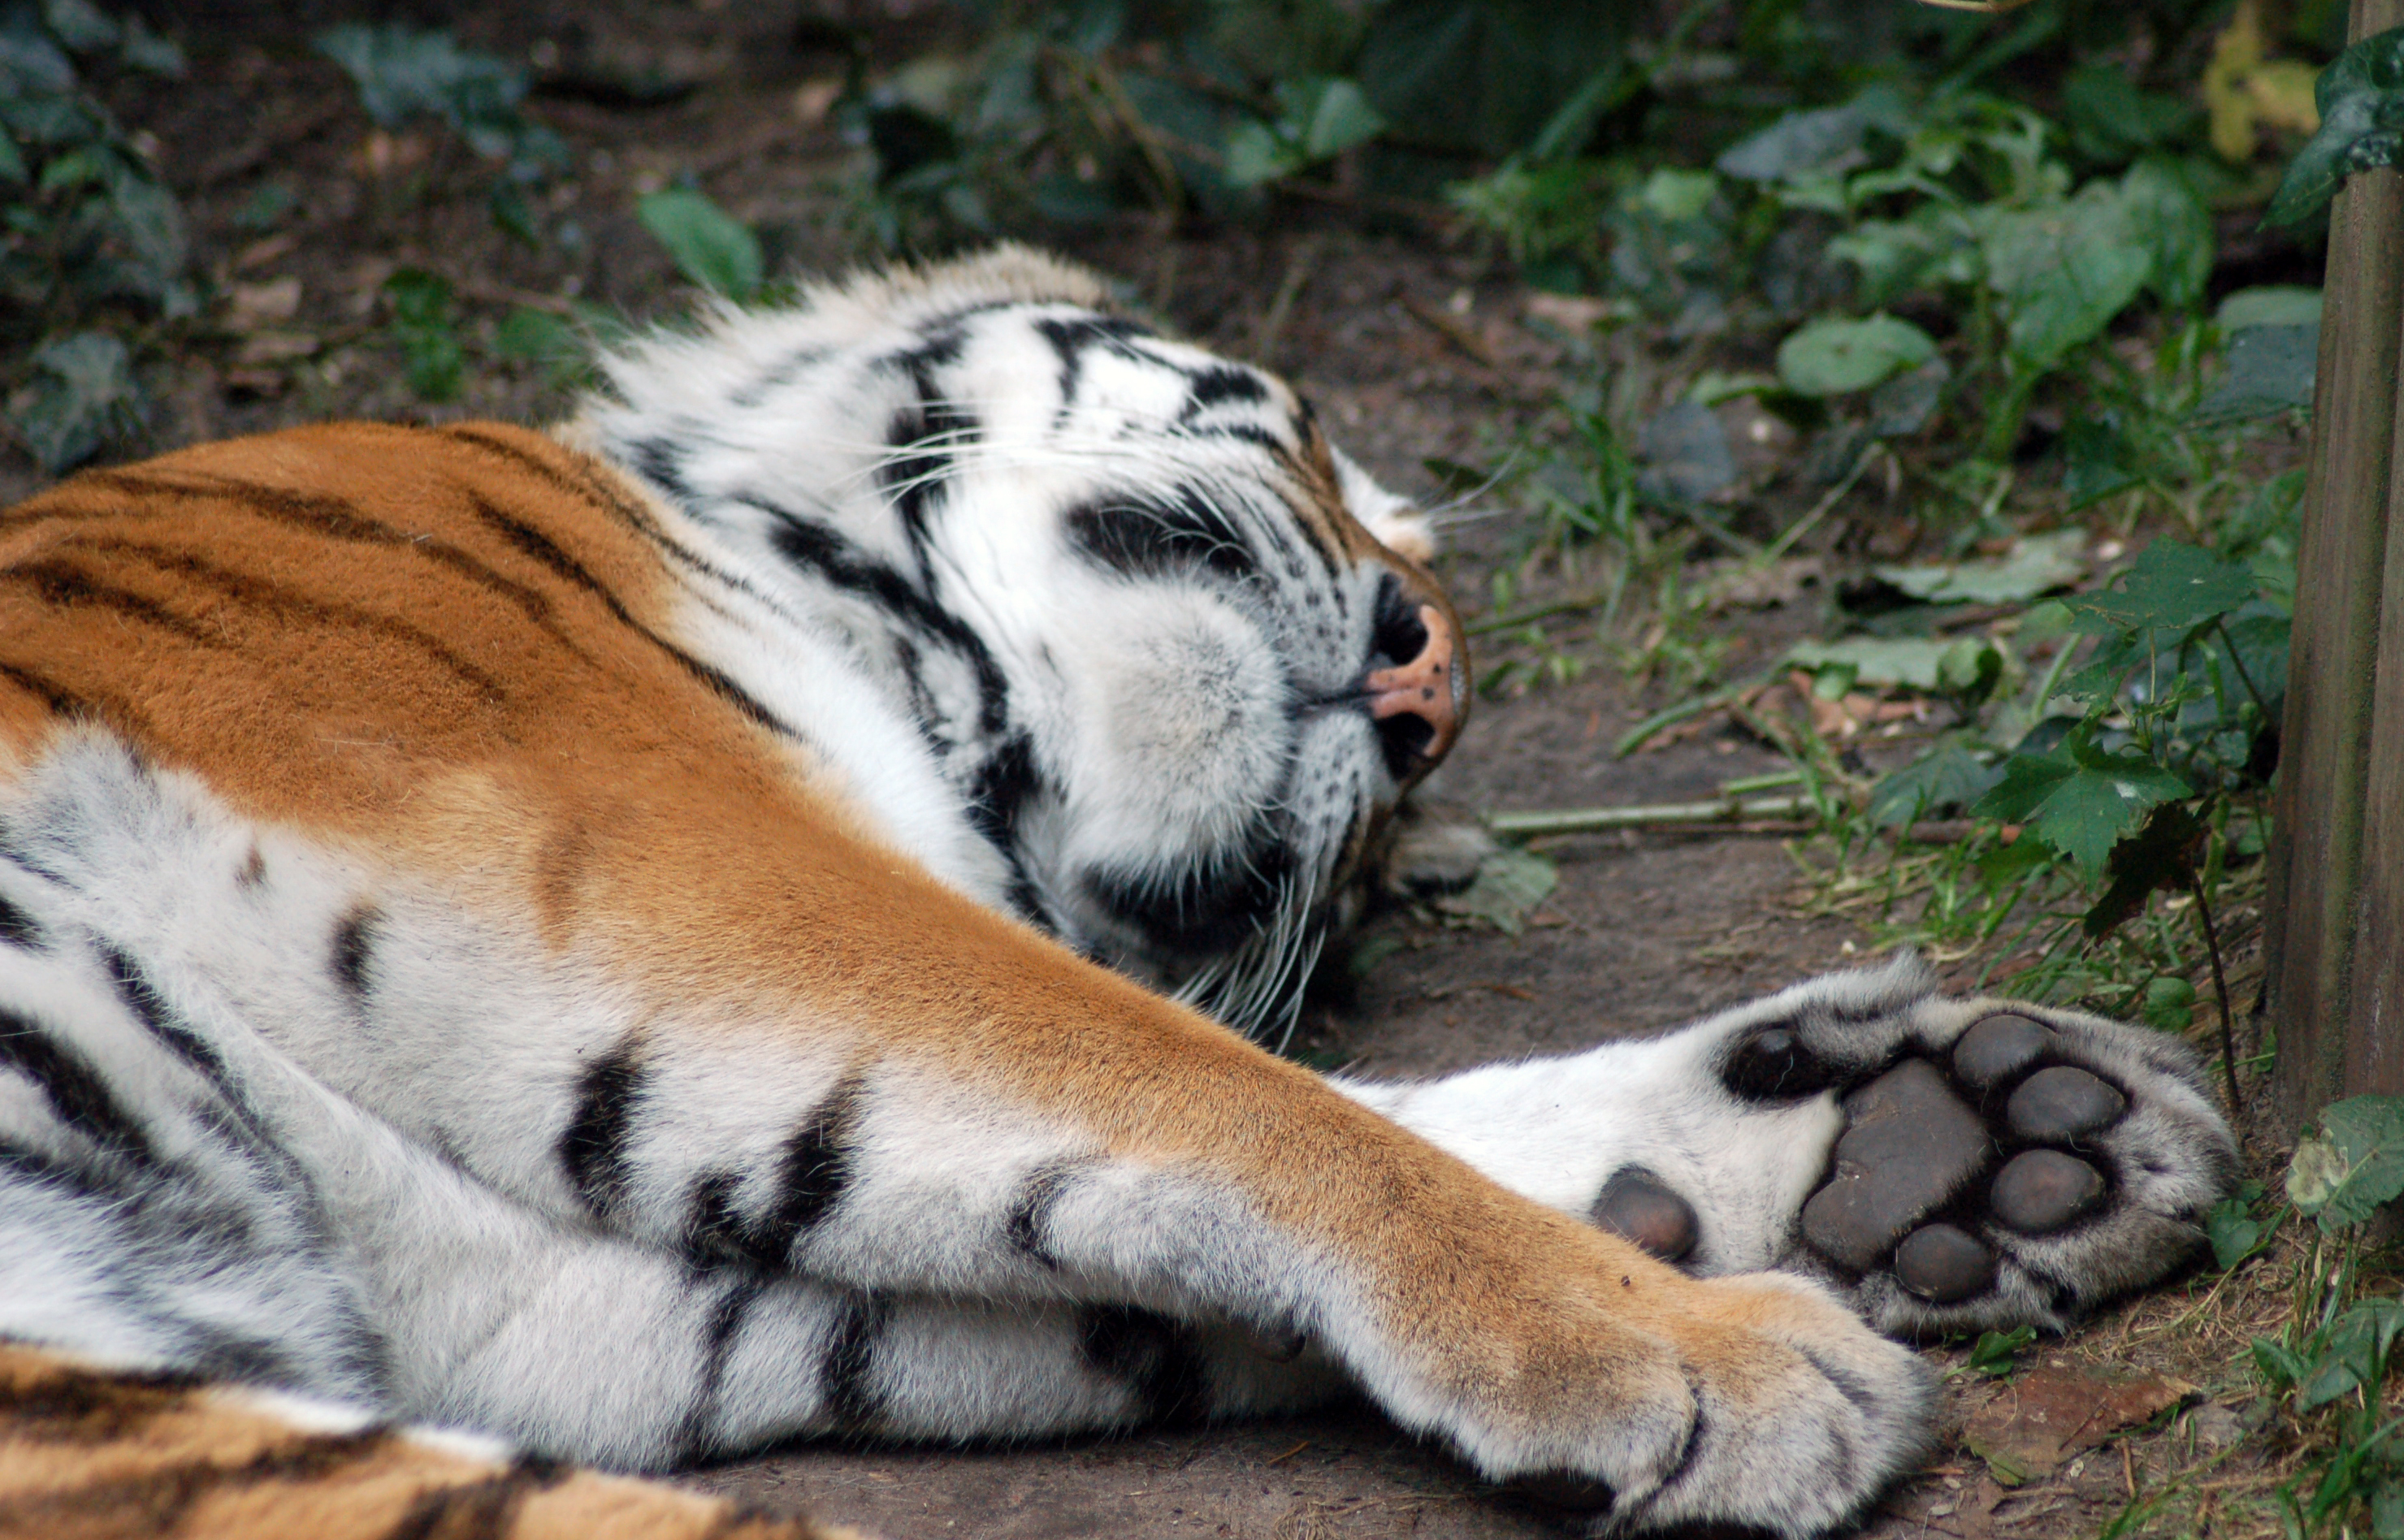 Sleeping tiger photo